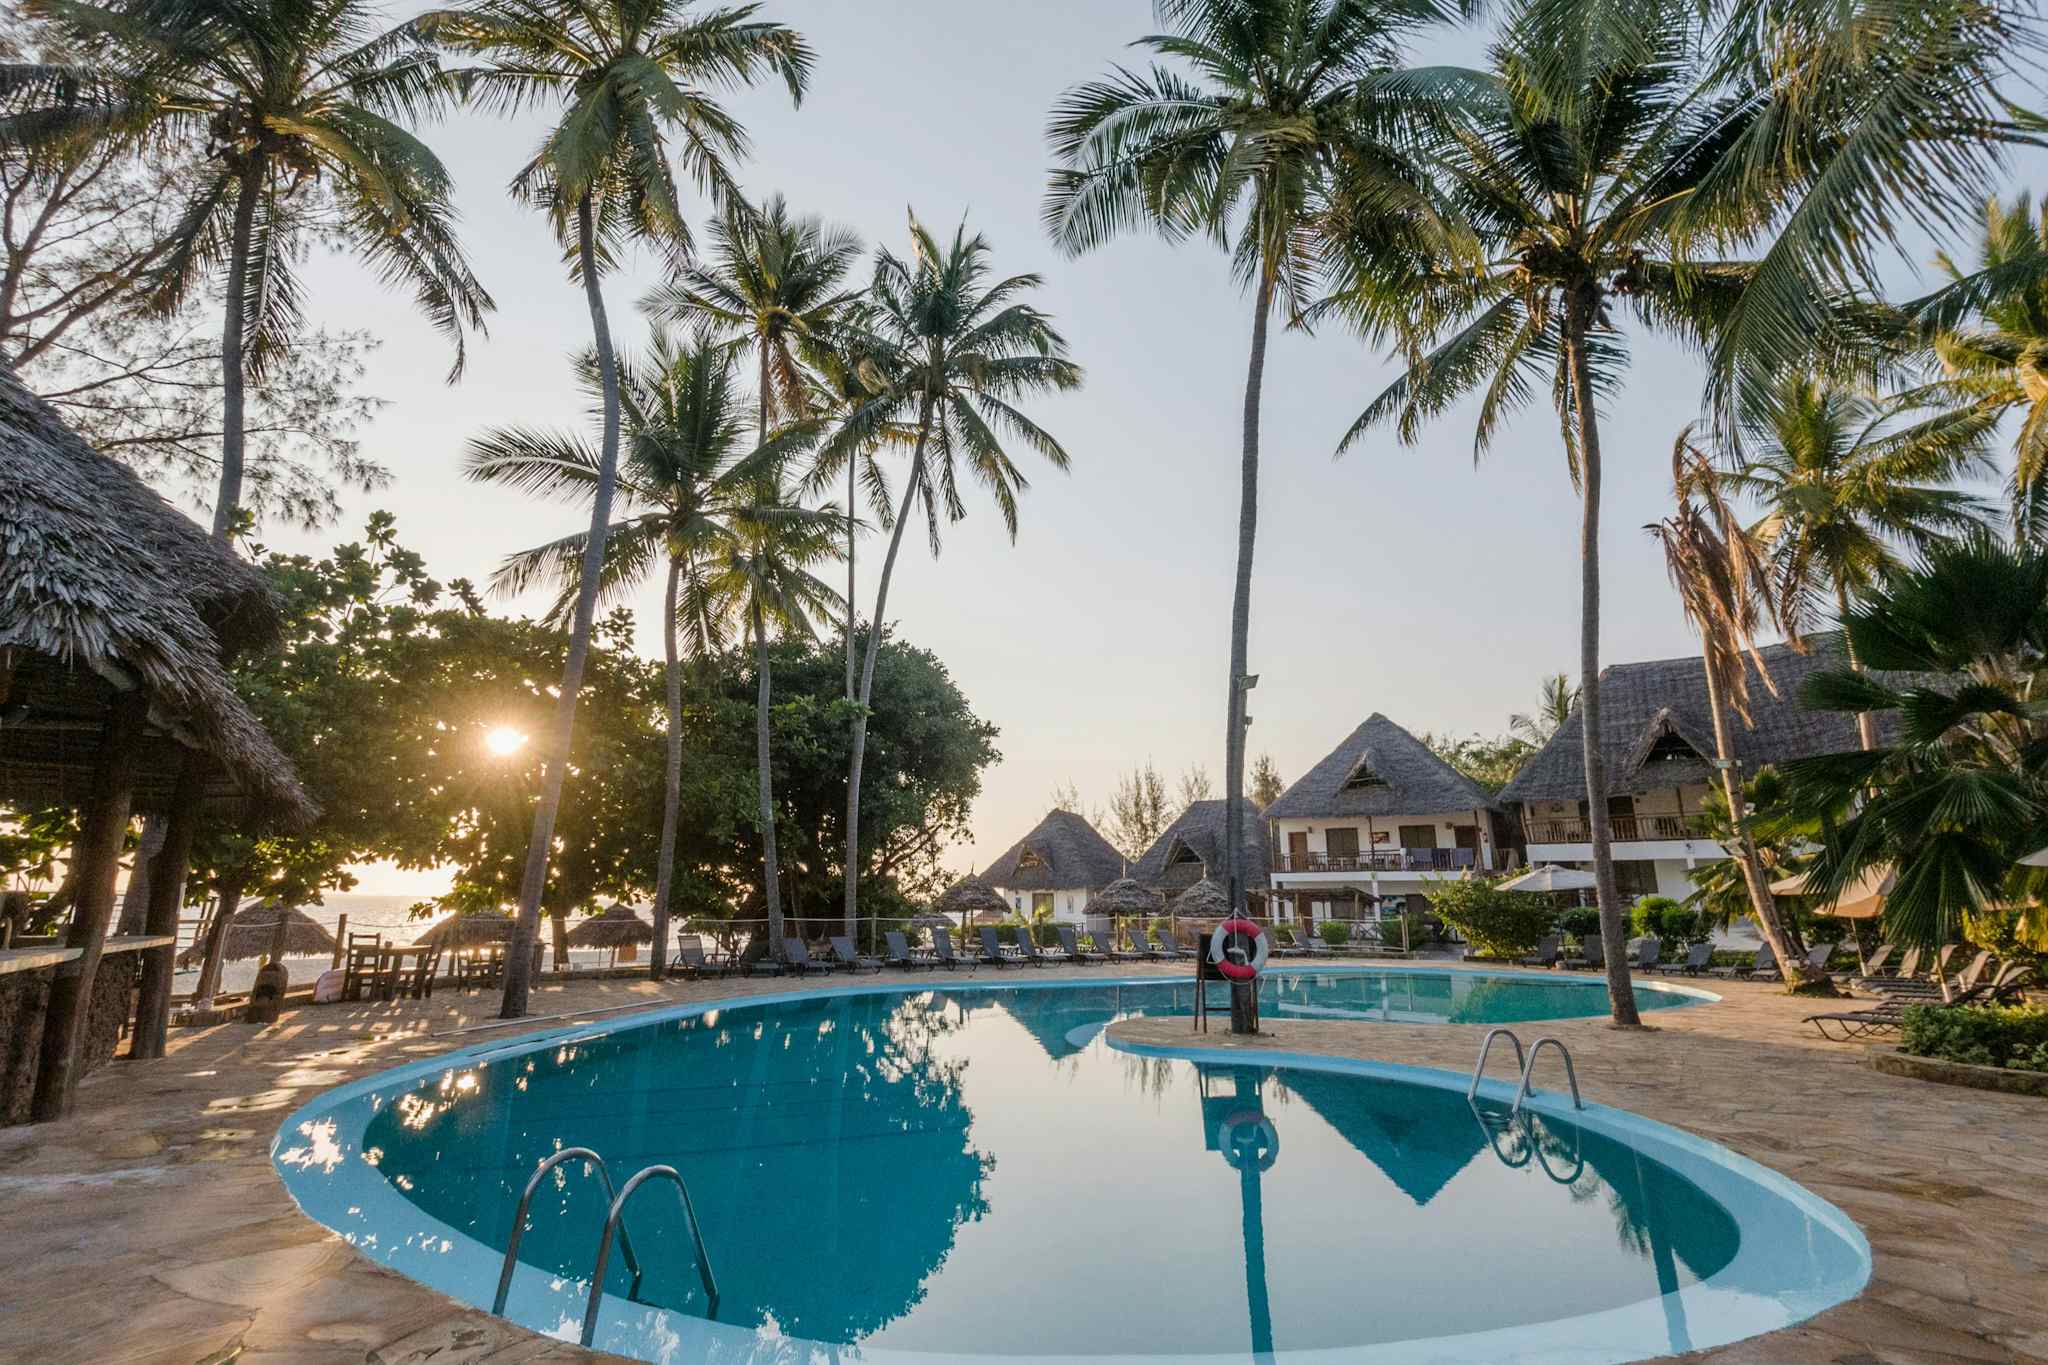 Pool at Paradise Beach Resort, Zanzibar.